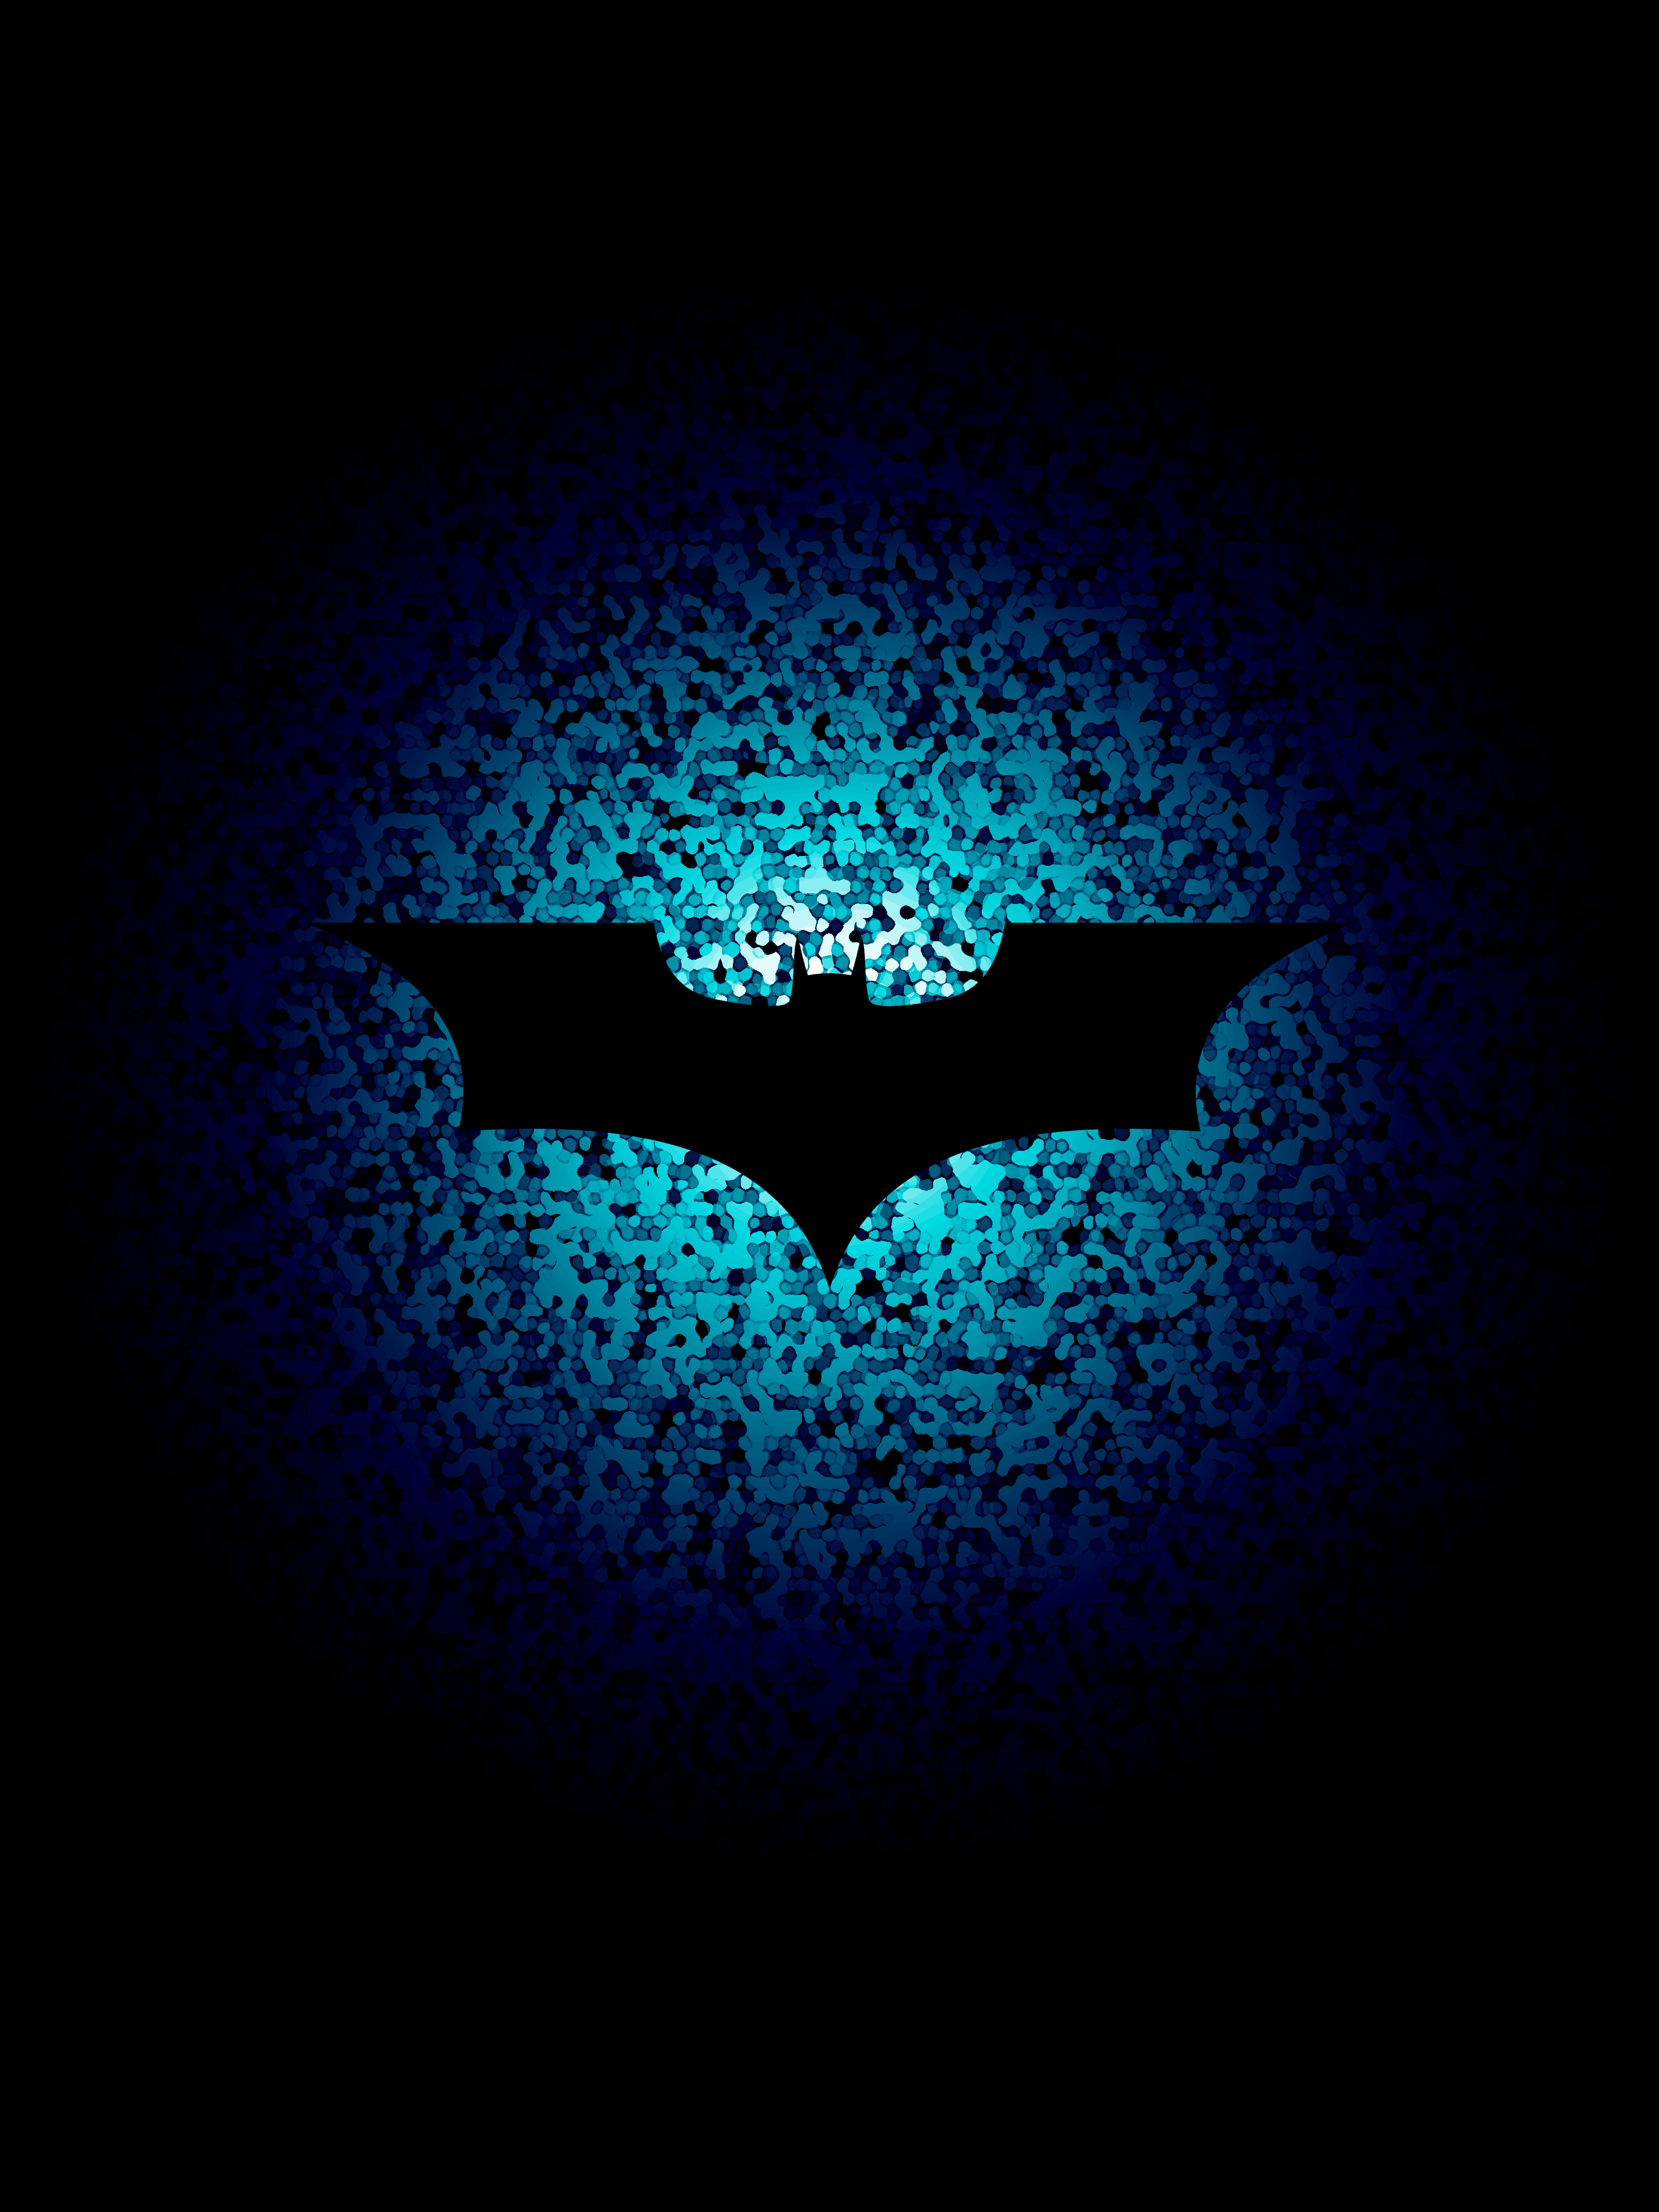 The Dark Knight Rises v.2 - HD Wallpaper by ShikharSrivastava on DeviantArt